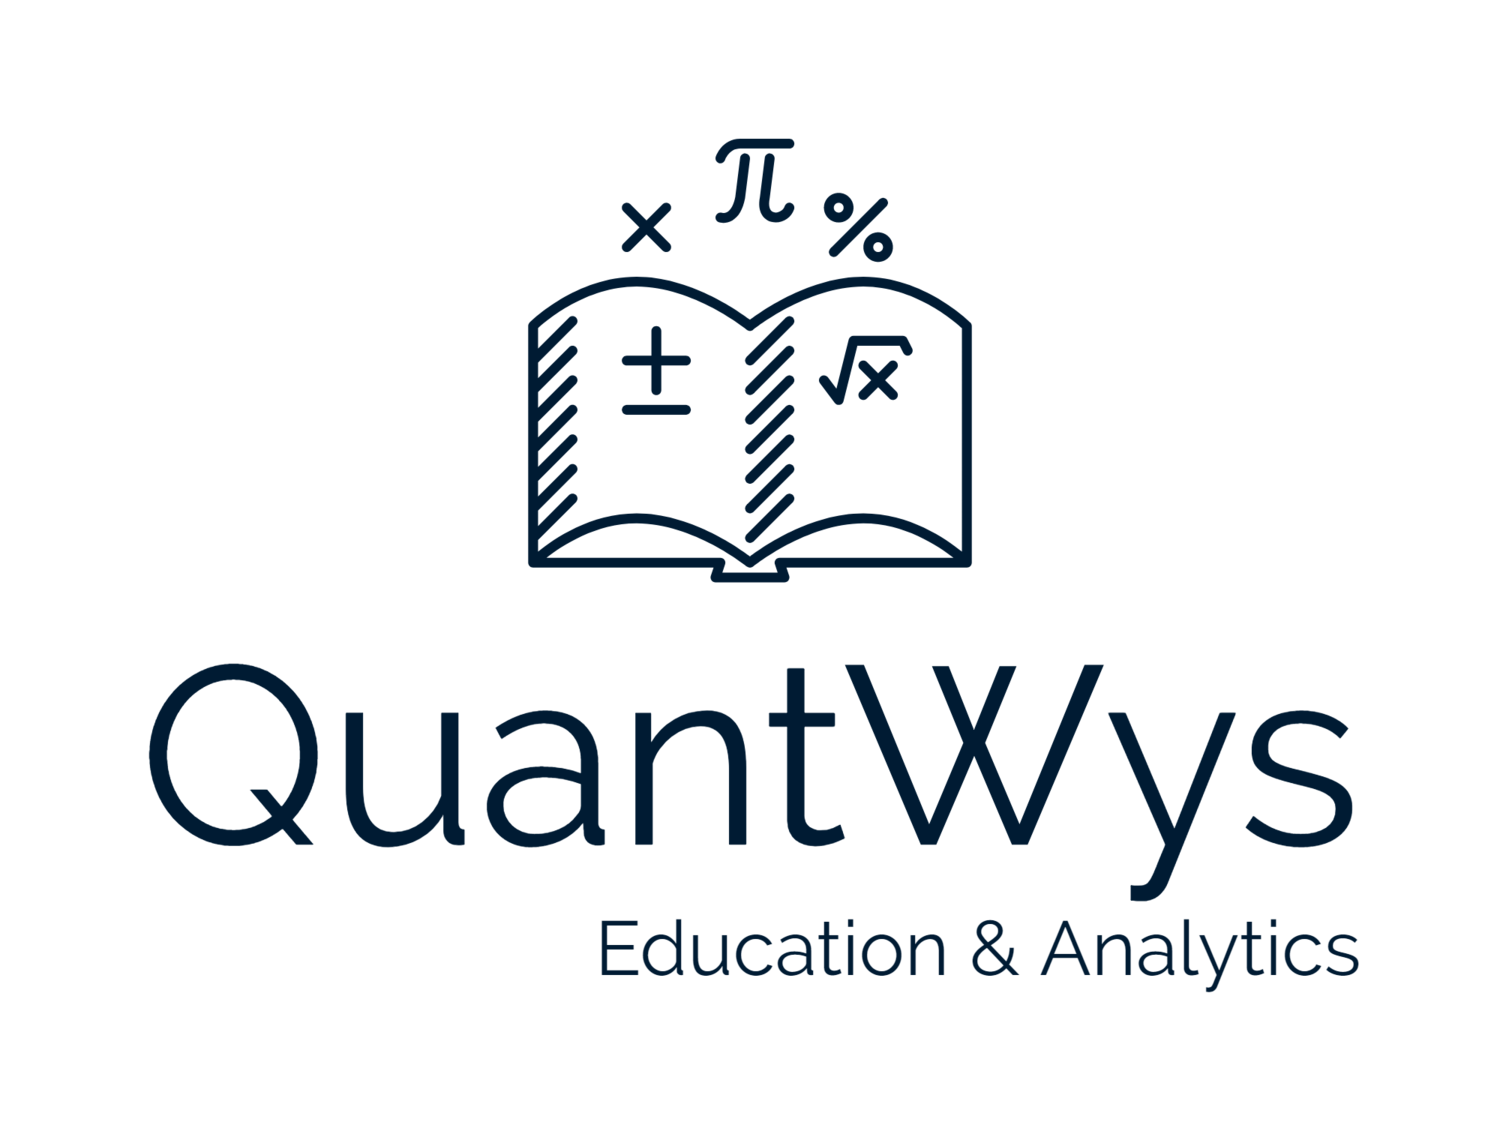 QuantWys Education & Analytics